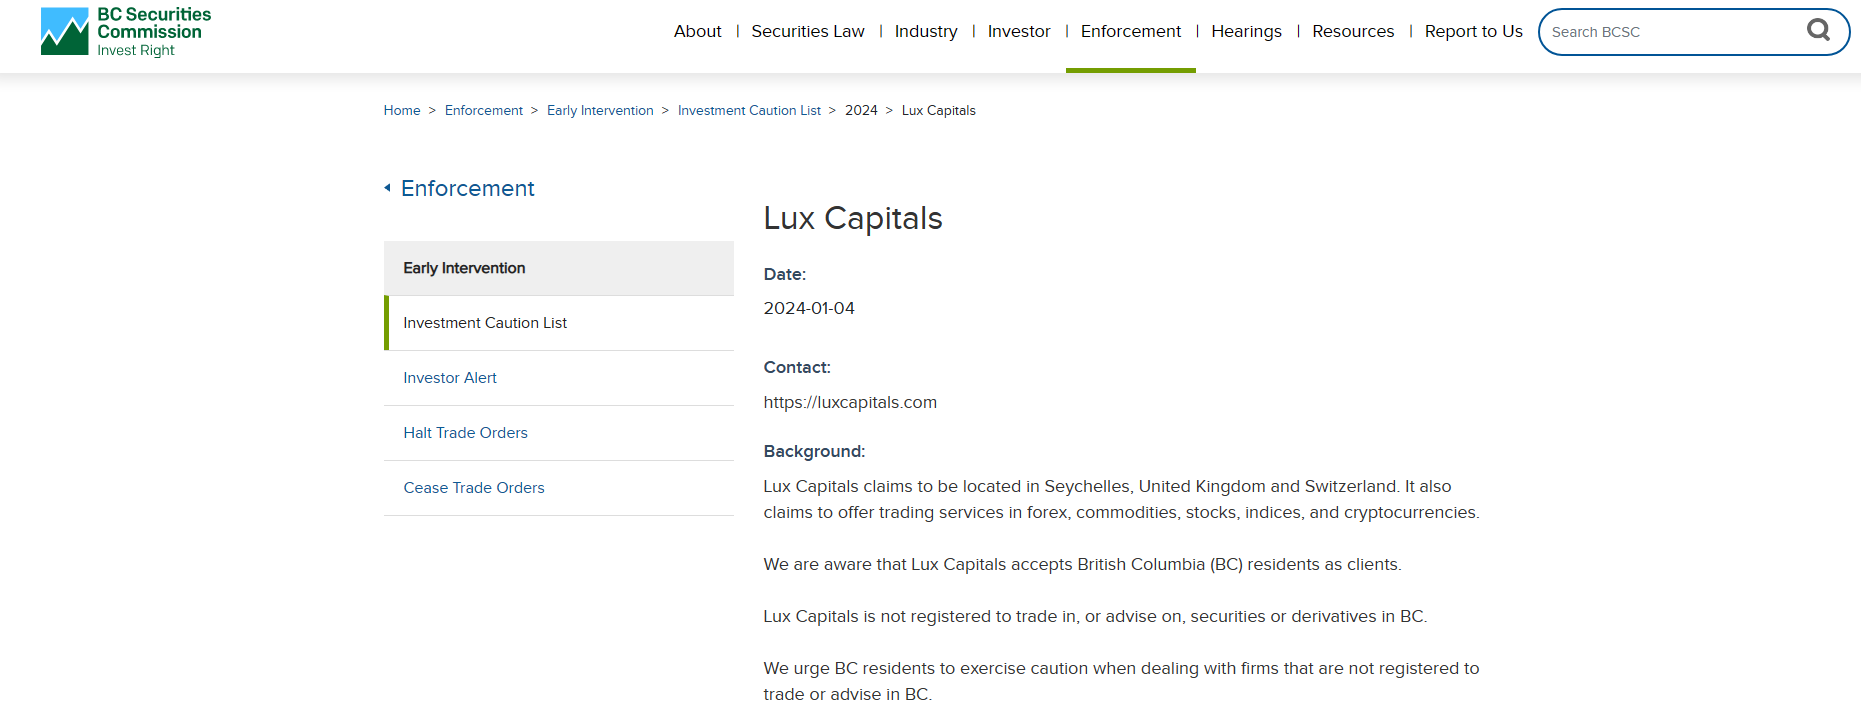 Lux Capitals